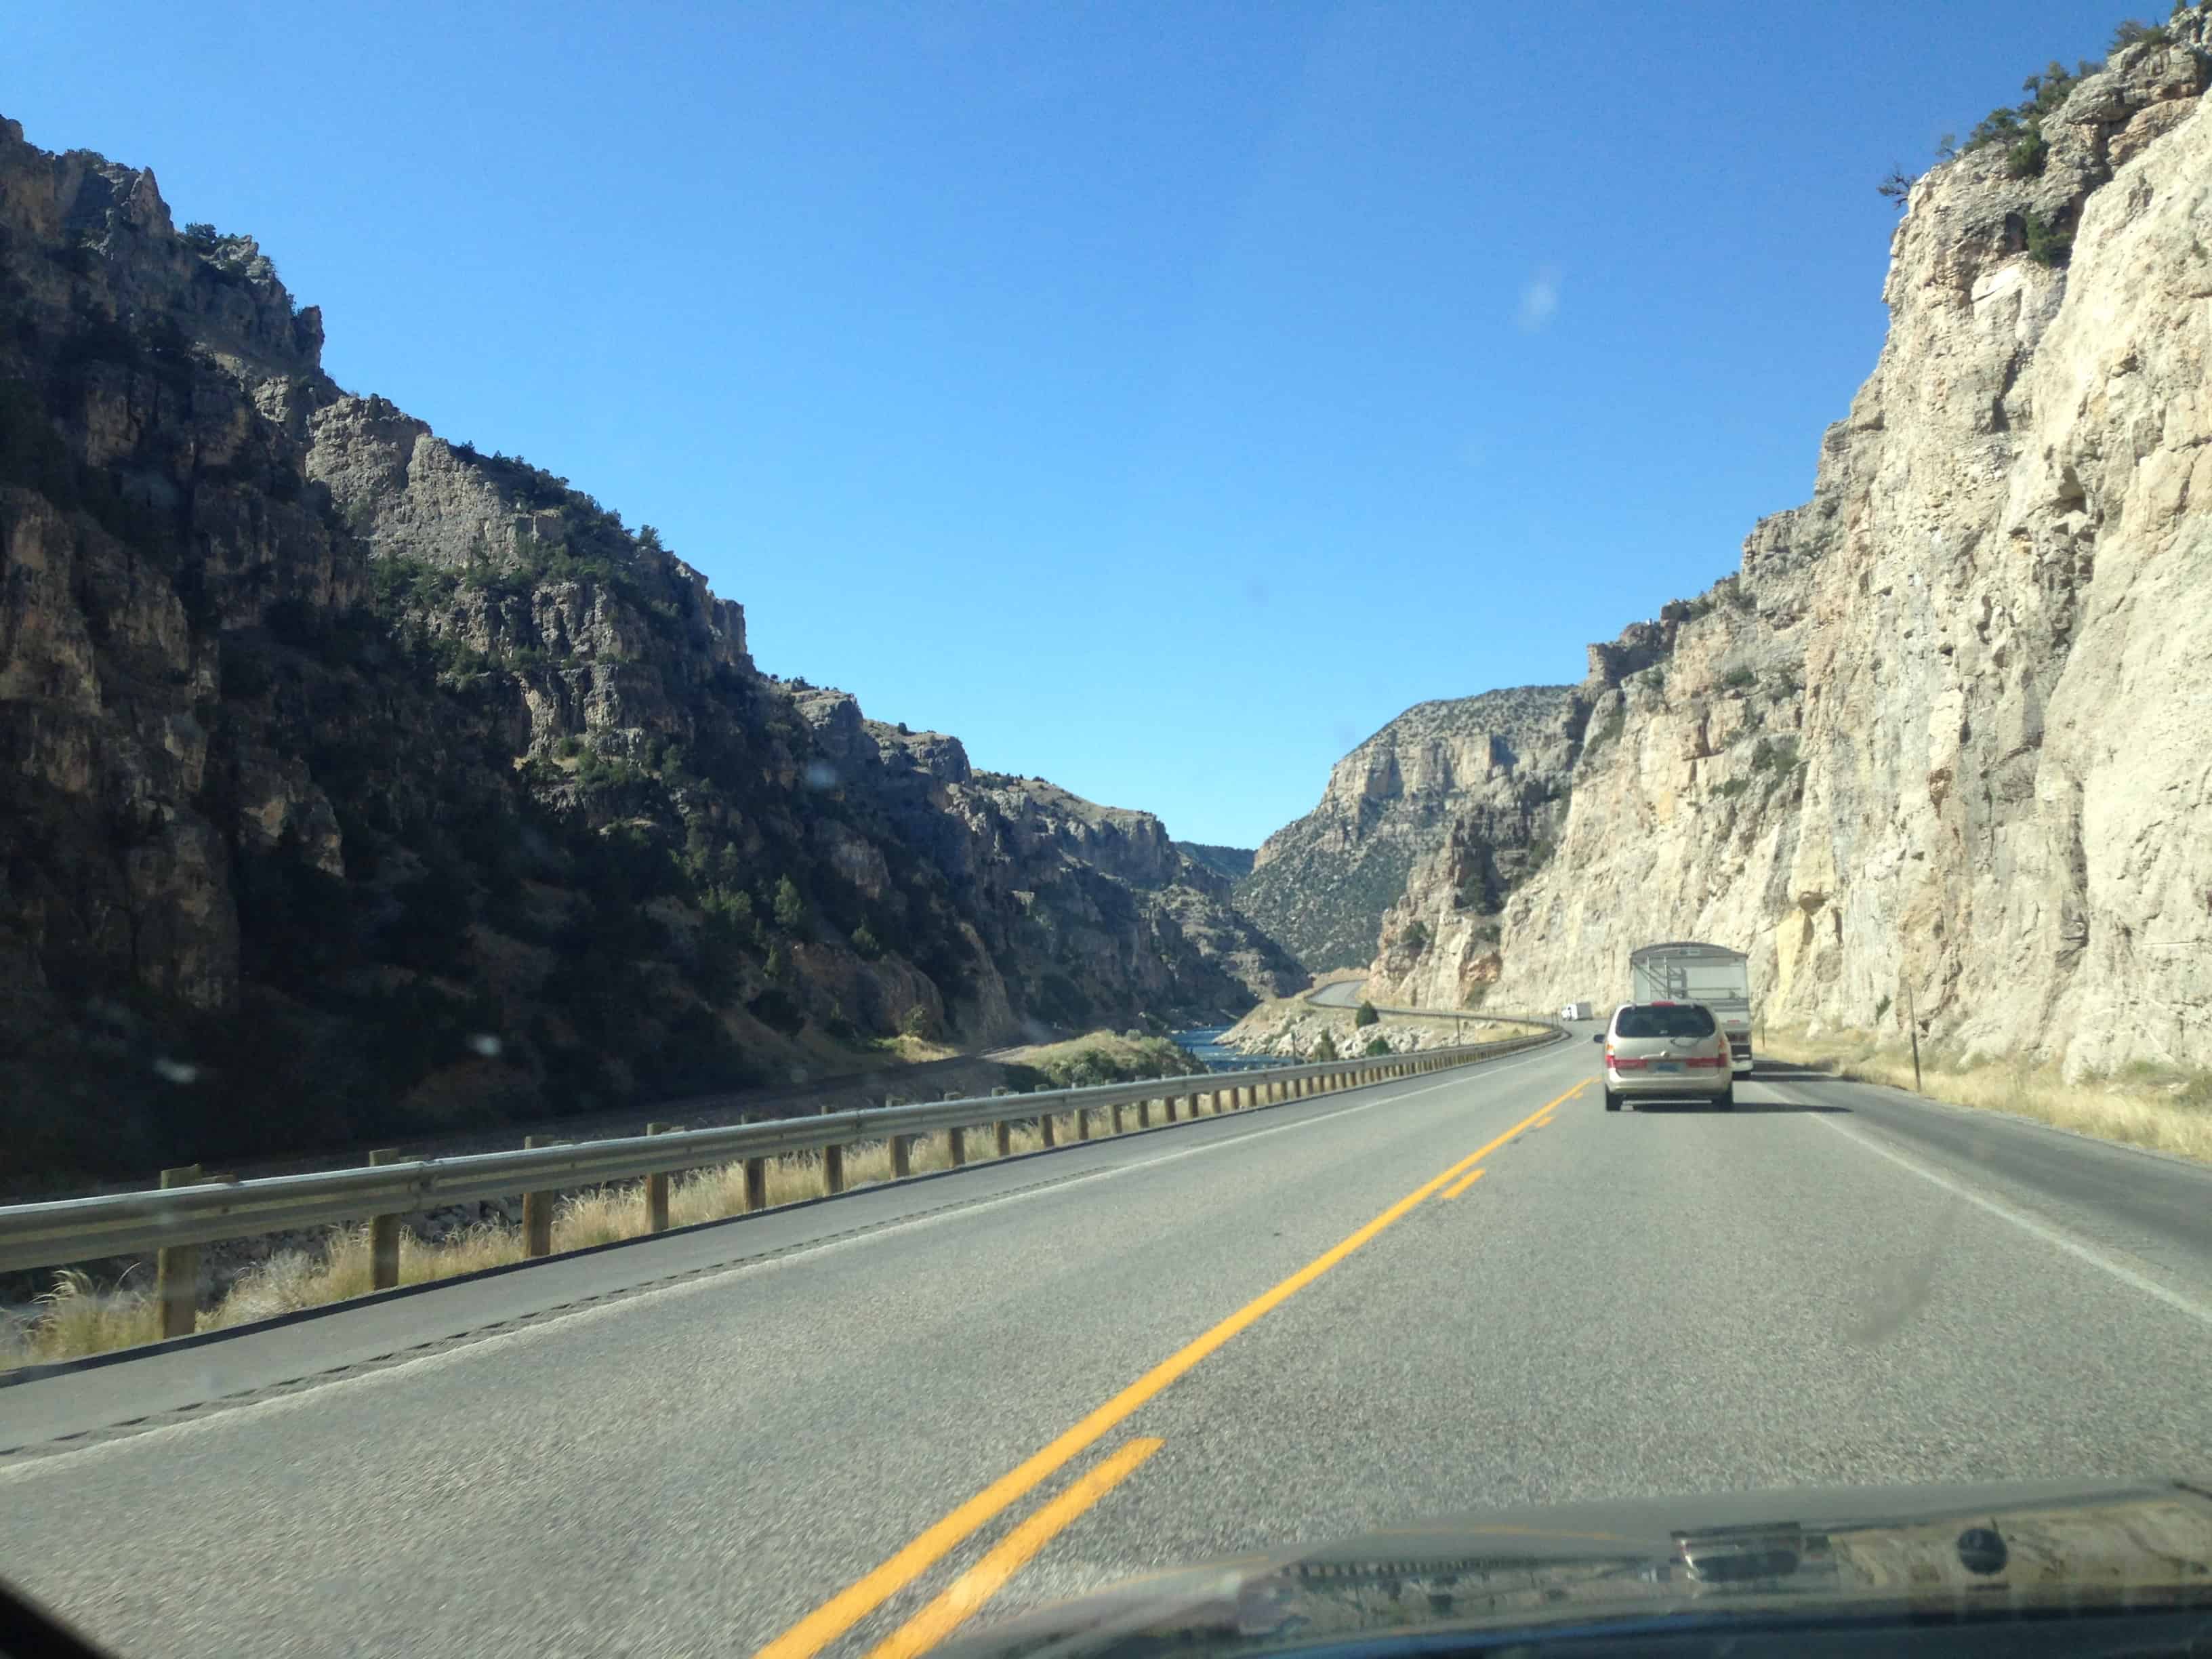 Driving through the canyon